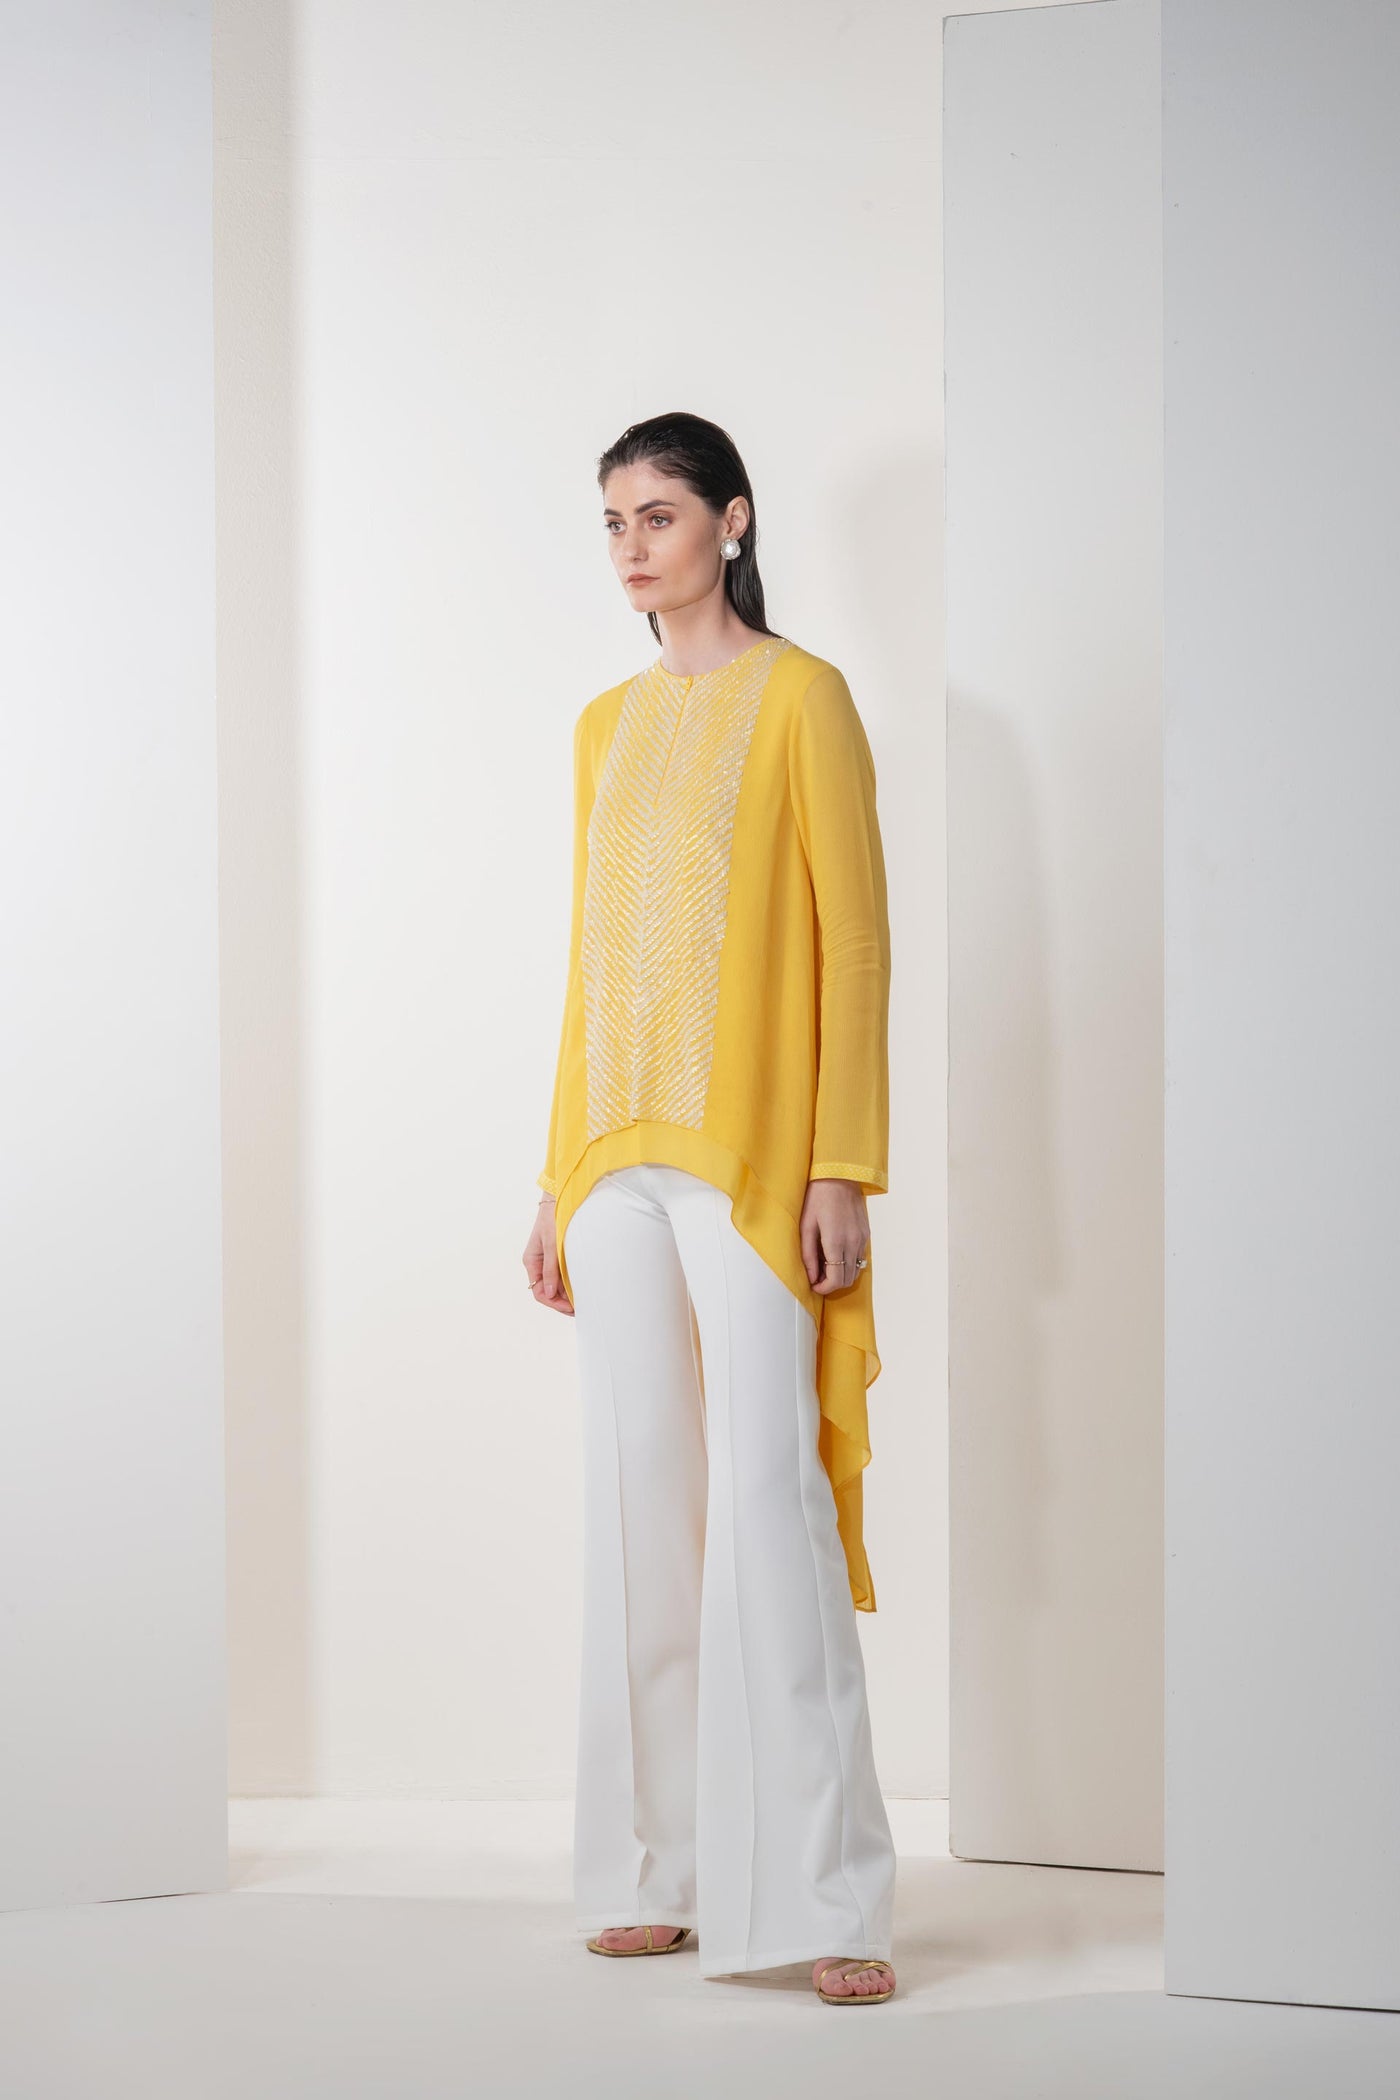 Namrata Joshipura Metallic Cord Double Layer Tunic yellow western indian designer wear online shopping melange singapore